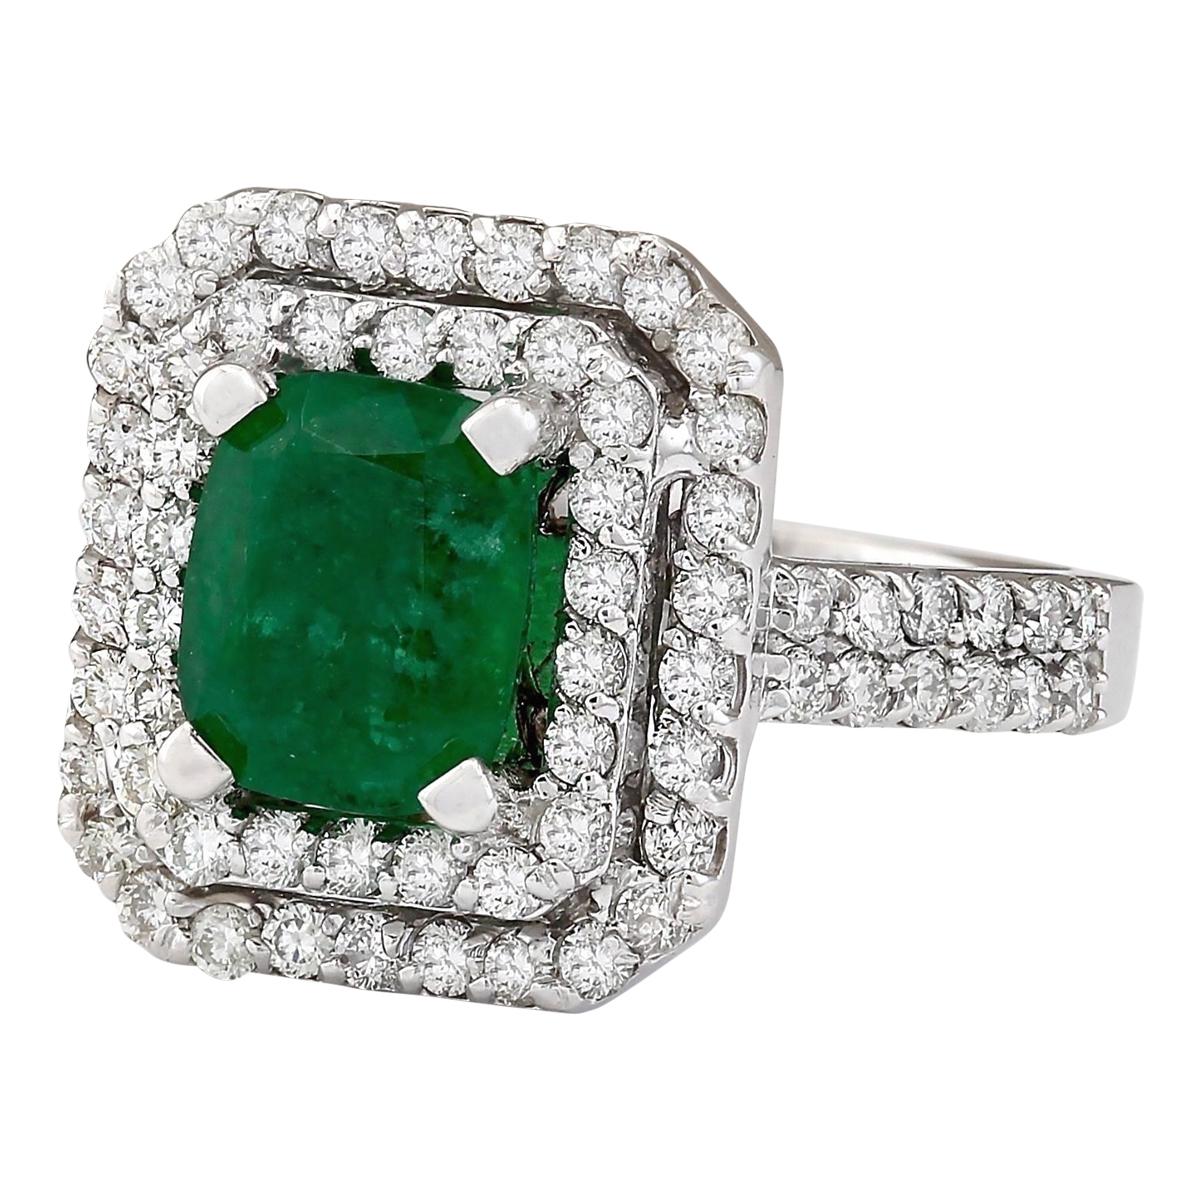 3.59 Carat Natural Emerald 14 Karat White Gold Diamond Ring
Stamped: 14K White Gold
Total Ring Weight: 7.7 Grams
Total Natural Emerald Weight is 2.43 Carat (Measures: 9.00x7.00 mm)
Color: Green
The Total Natural Diamond Weight is 1.16 Carat
Color: